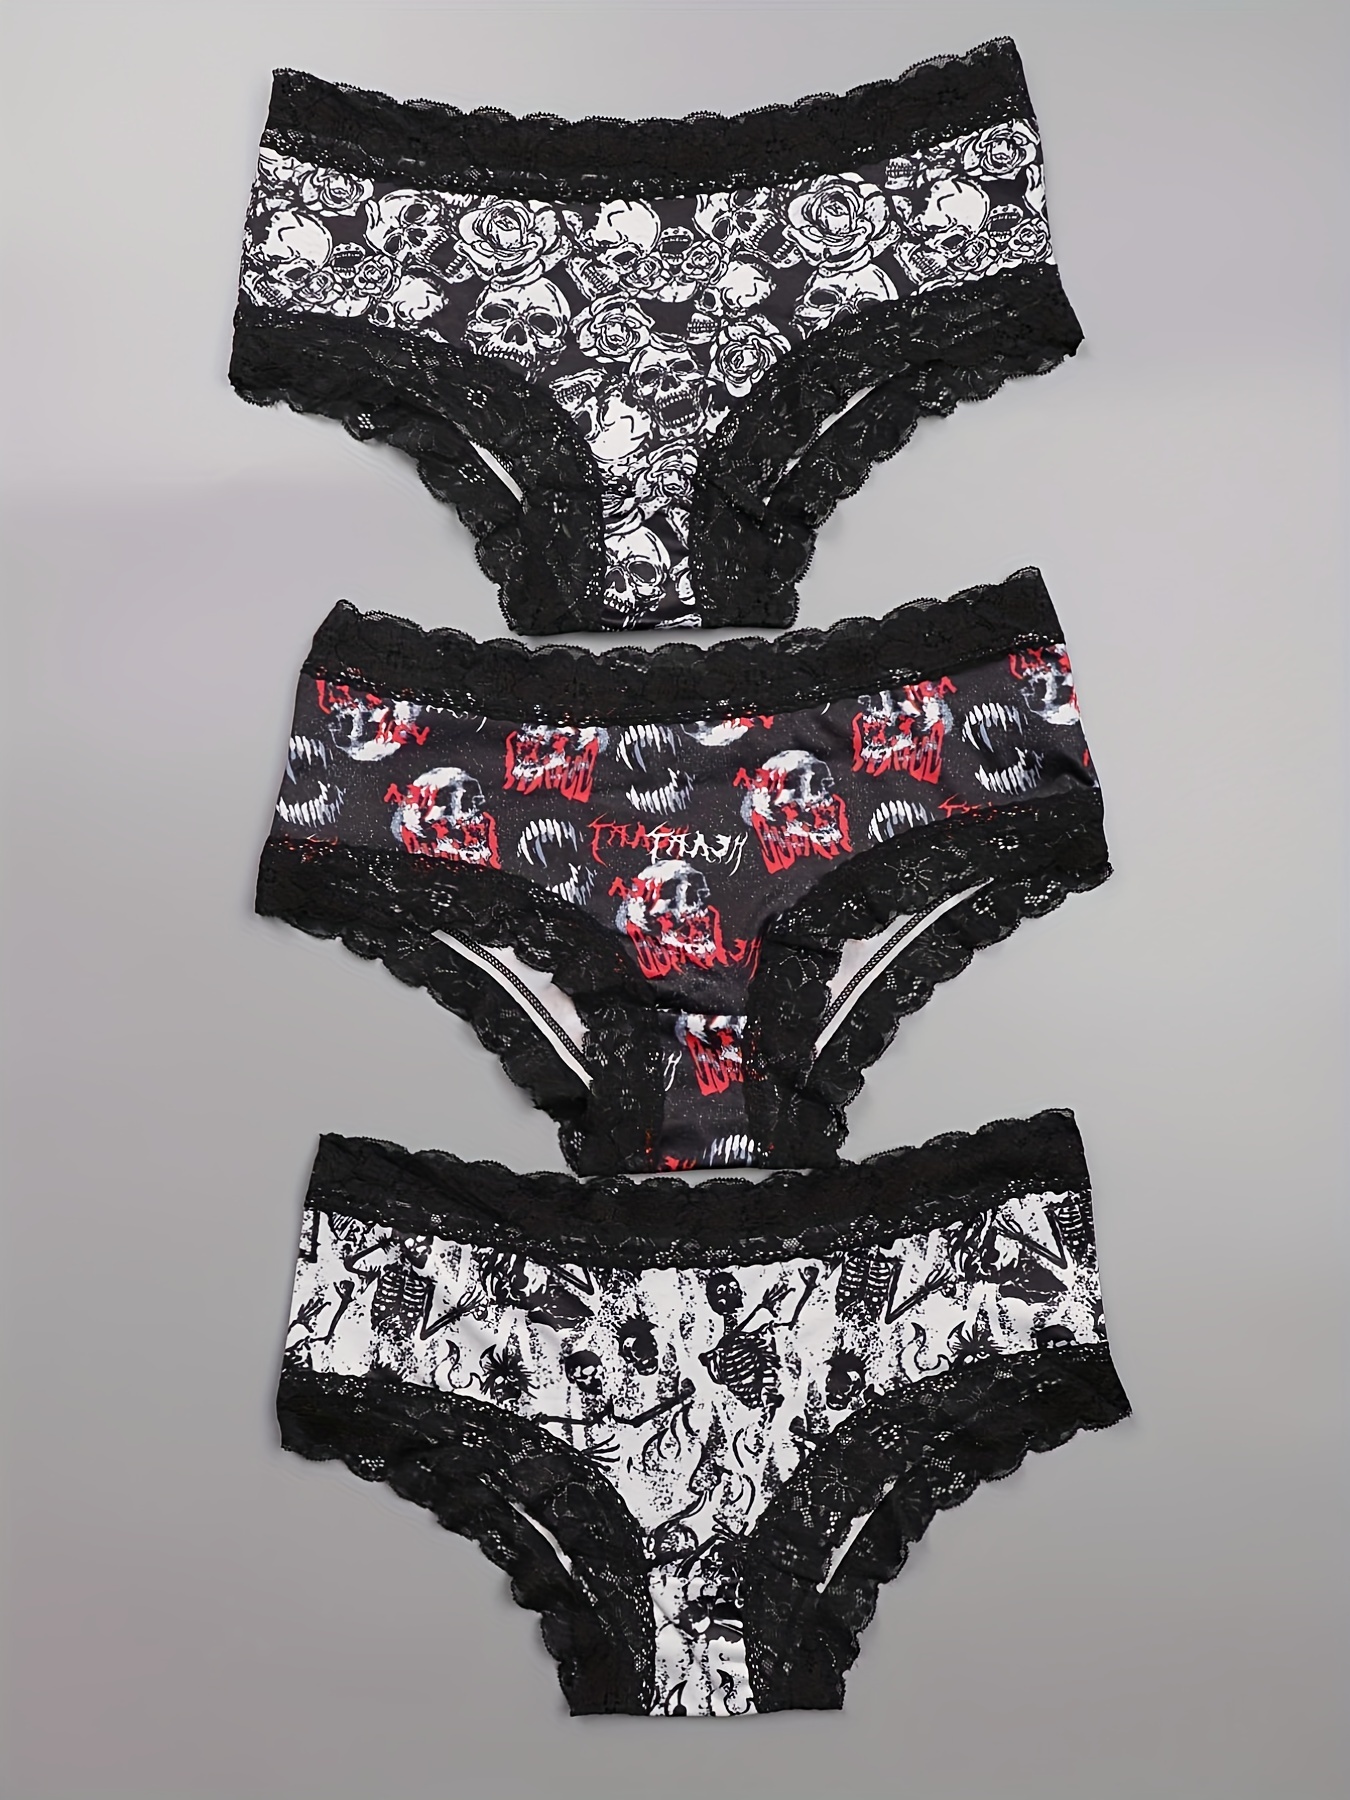 DISNIMO Starfish Shell Sexy Underwear for Women Plus Size 3 Pcs